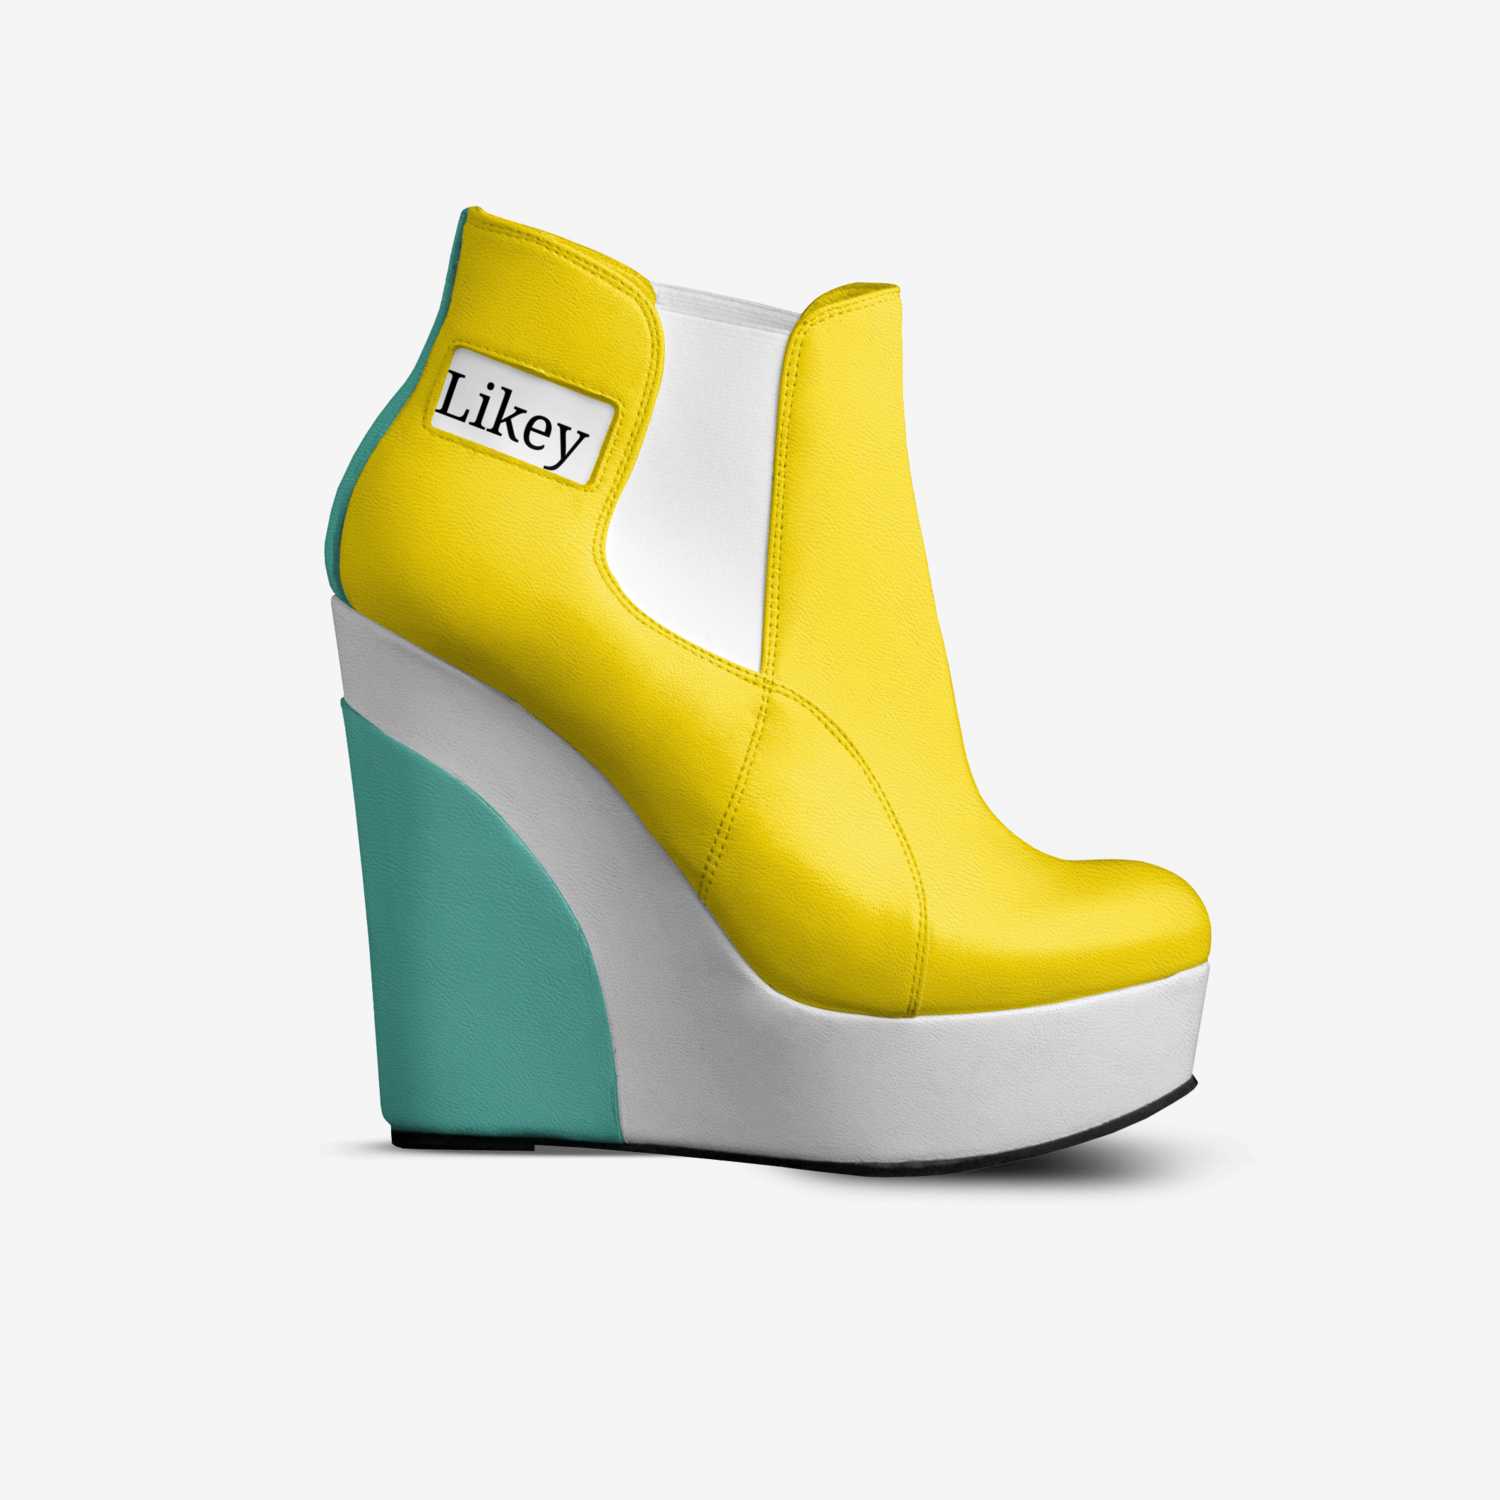 Kiara custom made in Italy shoes by Kiara Bezuidenhout | Side view